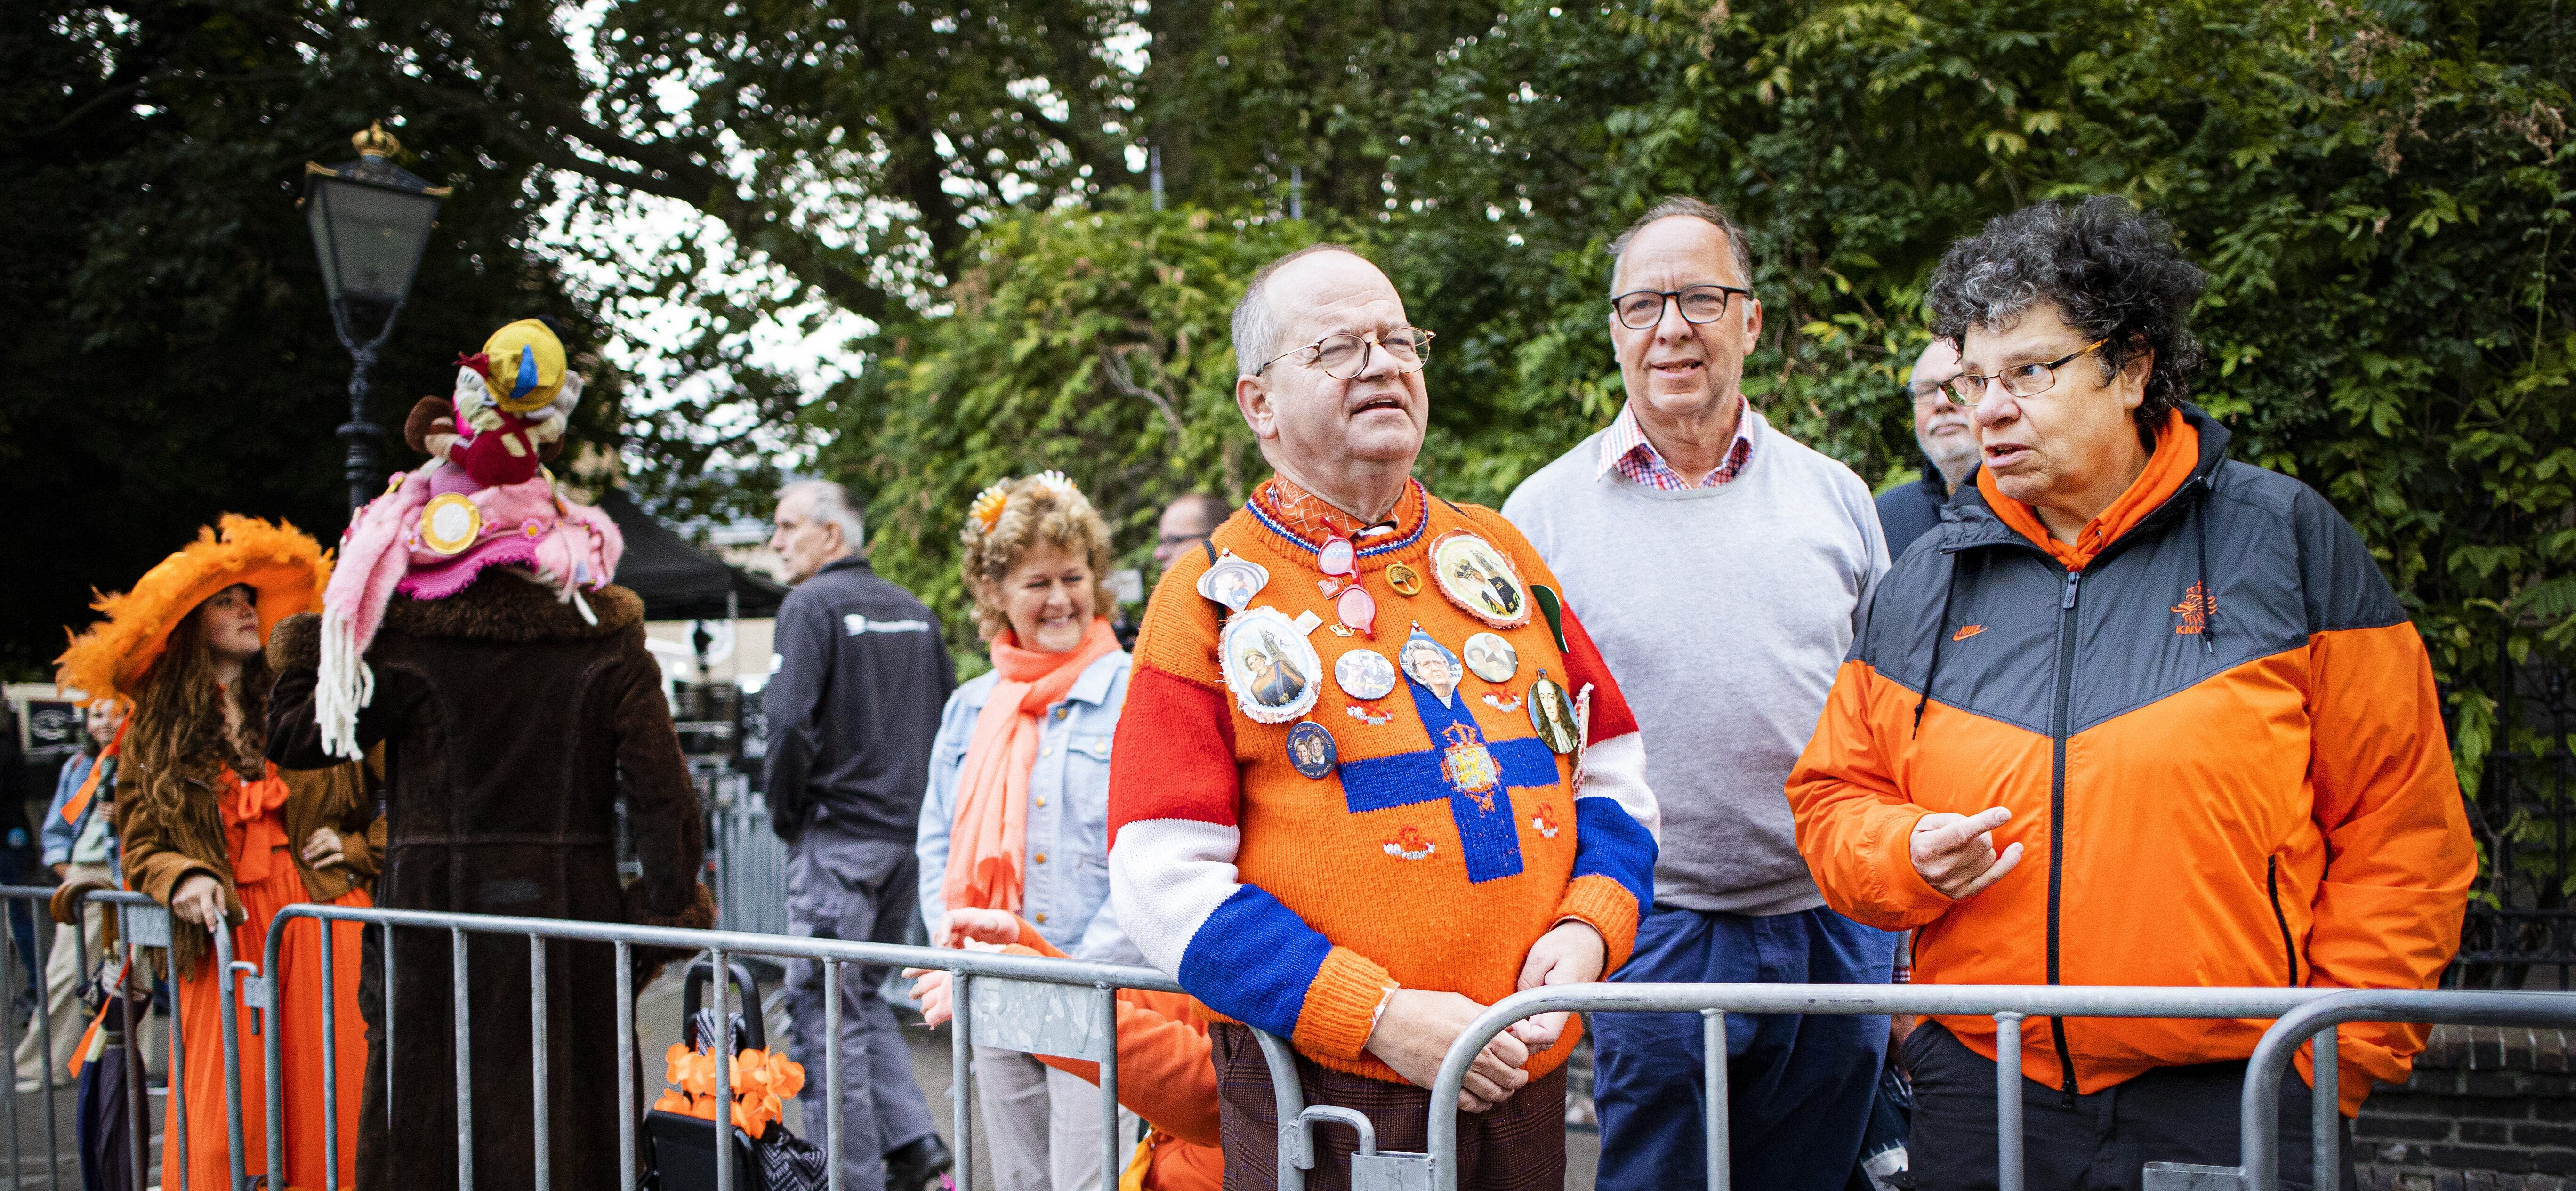 Prinsjesdag troonrede Willem-Alexander